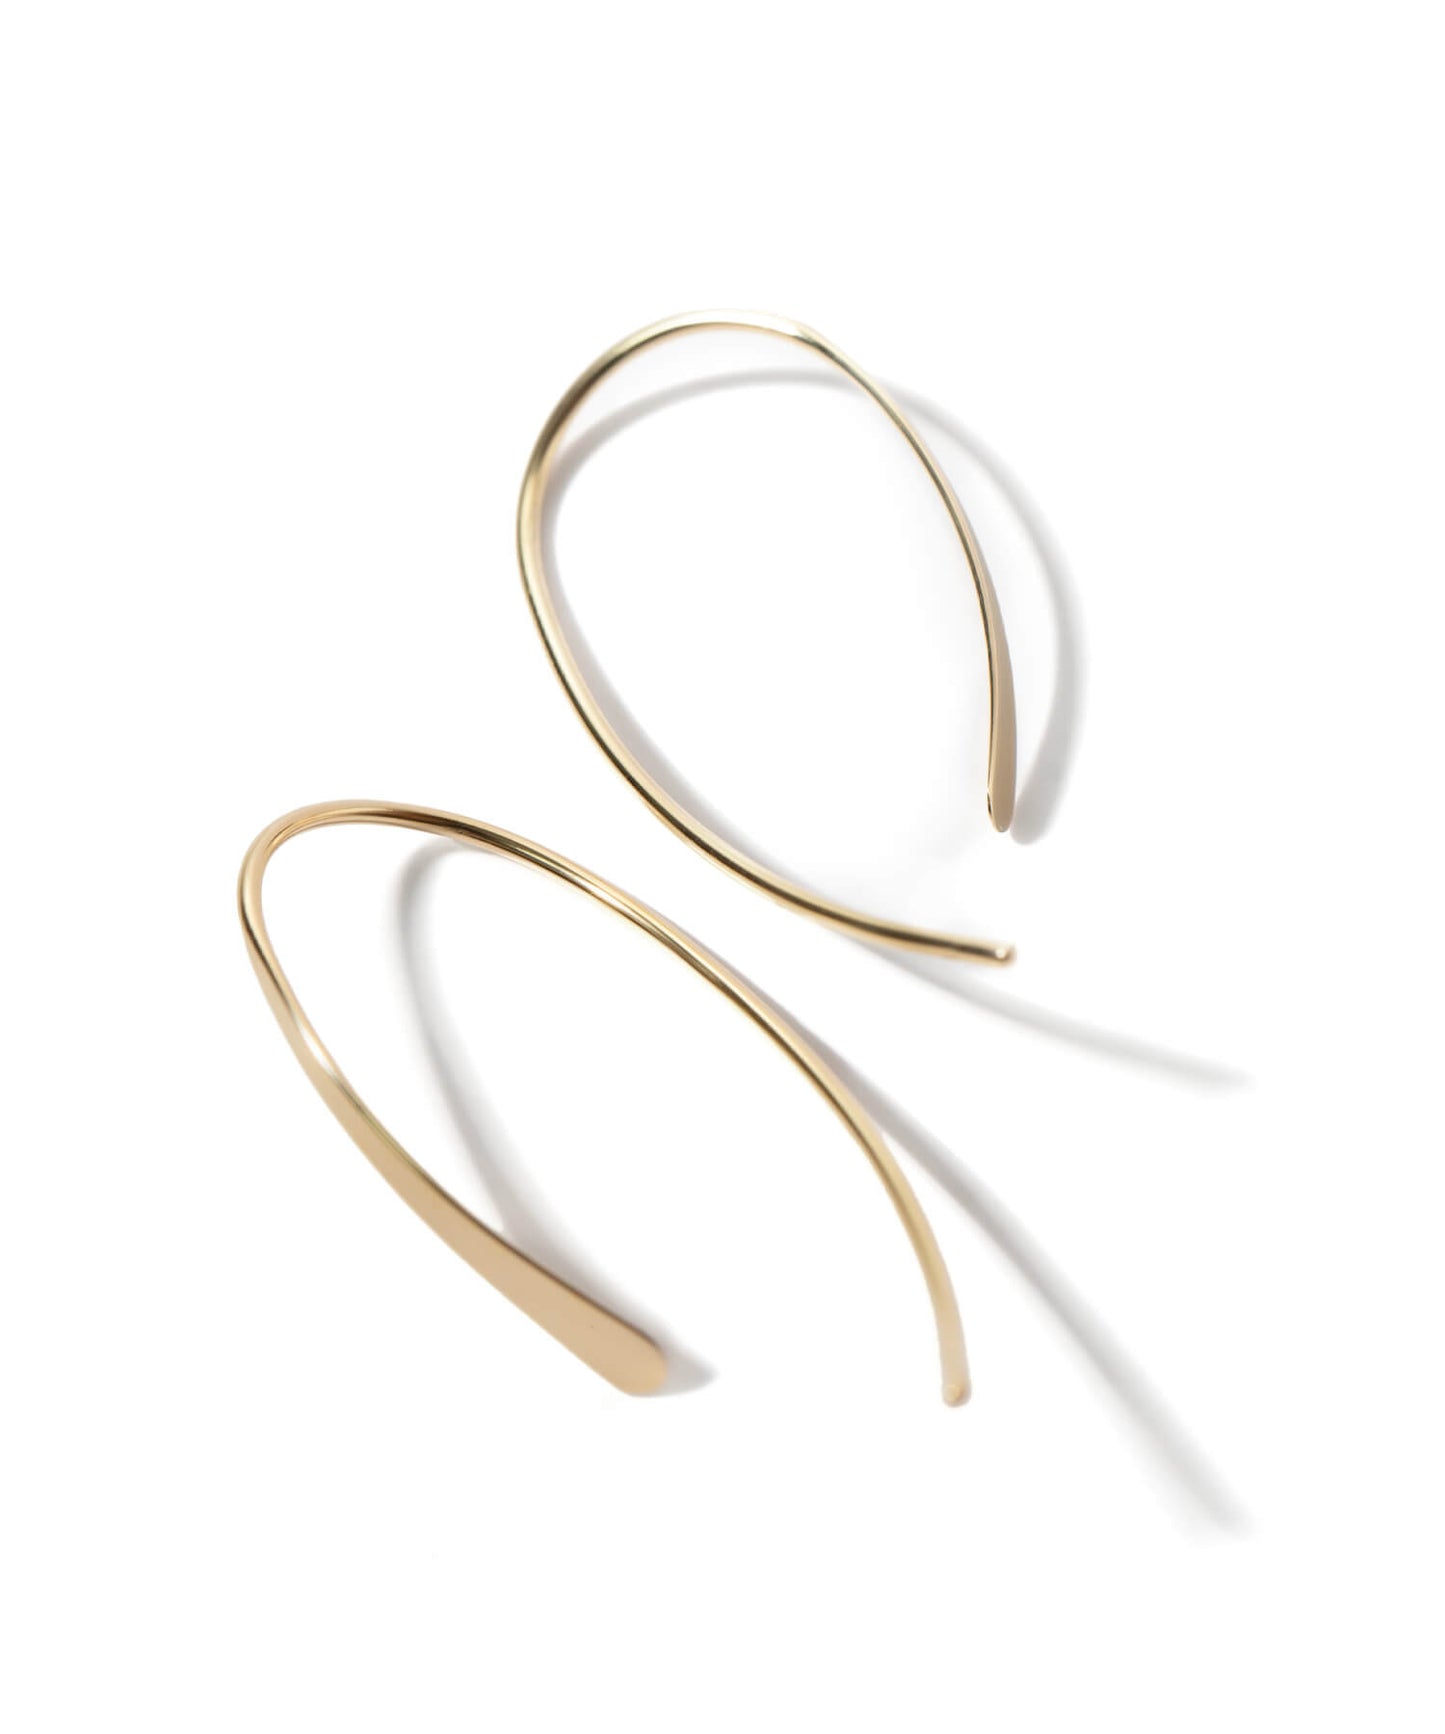 K18 Curve Hang Earrings | GOUCCIA-MIDDLE